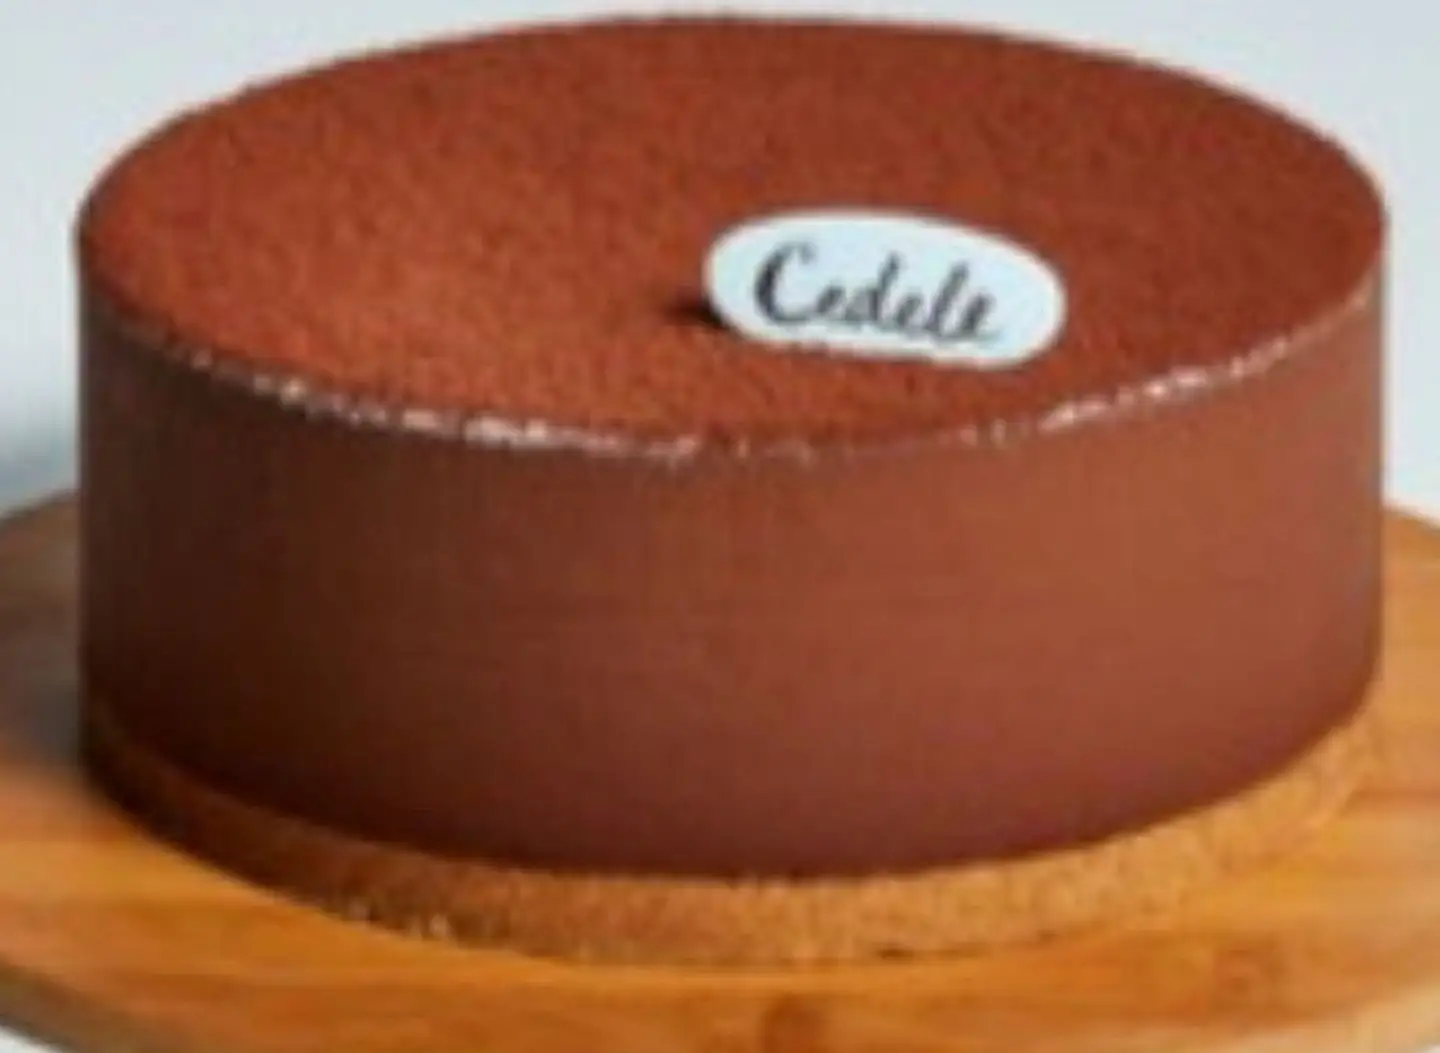 Chocolate Matcha Cake